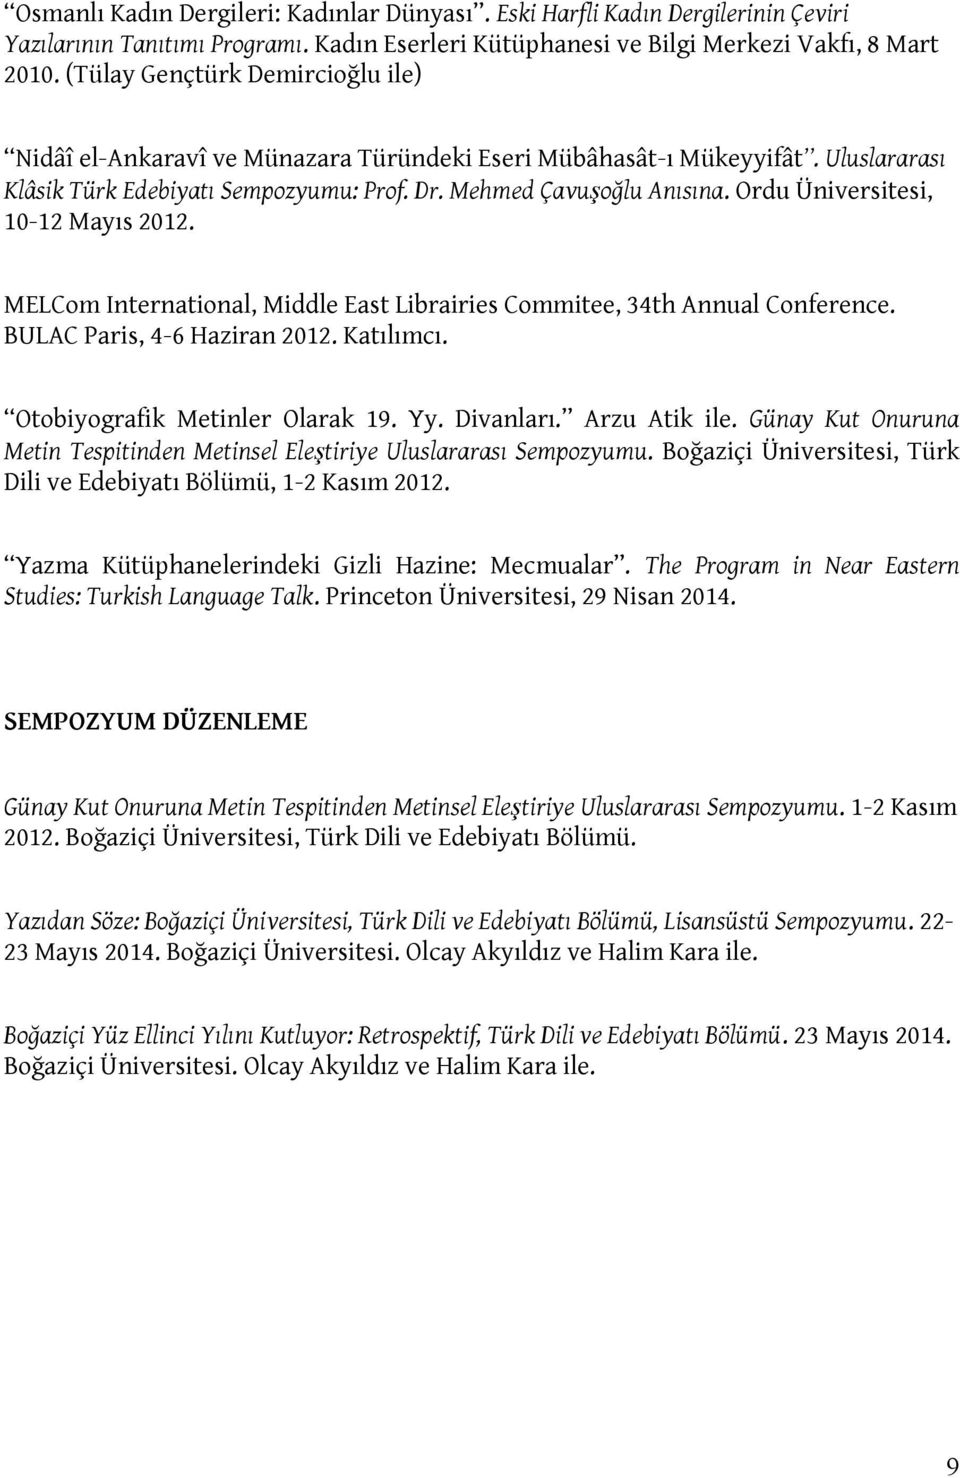 Ordu Üniversitesi, 10-12 Mayıs 2012. MELCom International, Middle East Librairies Commitee, 34th Annual Conference. BULAC Paris, 4-6 Haziran 2012. Katılımcı. Otobiyografik Metinler Olarak 19. Yy.